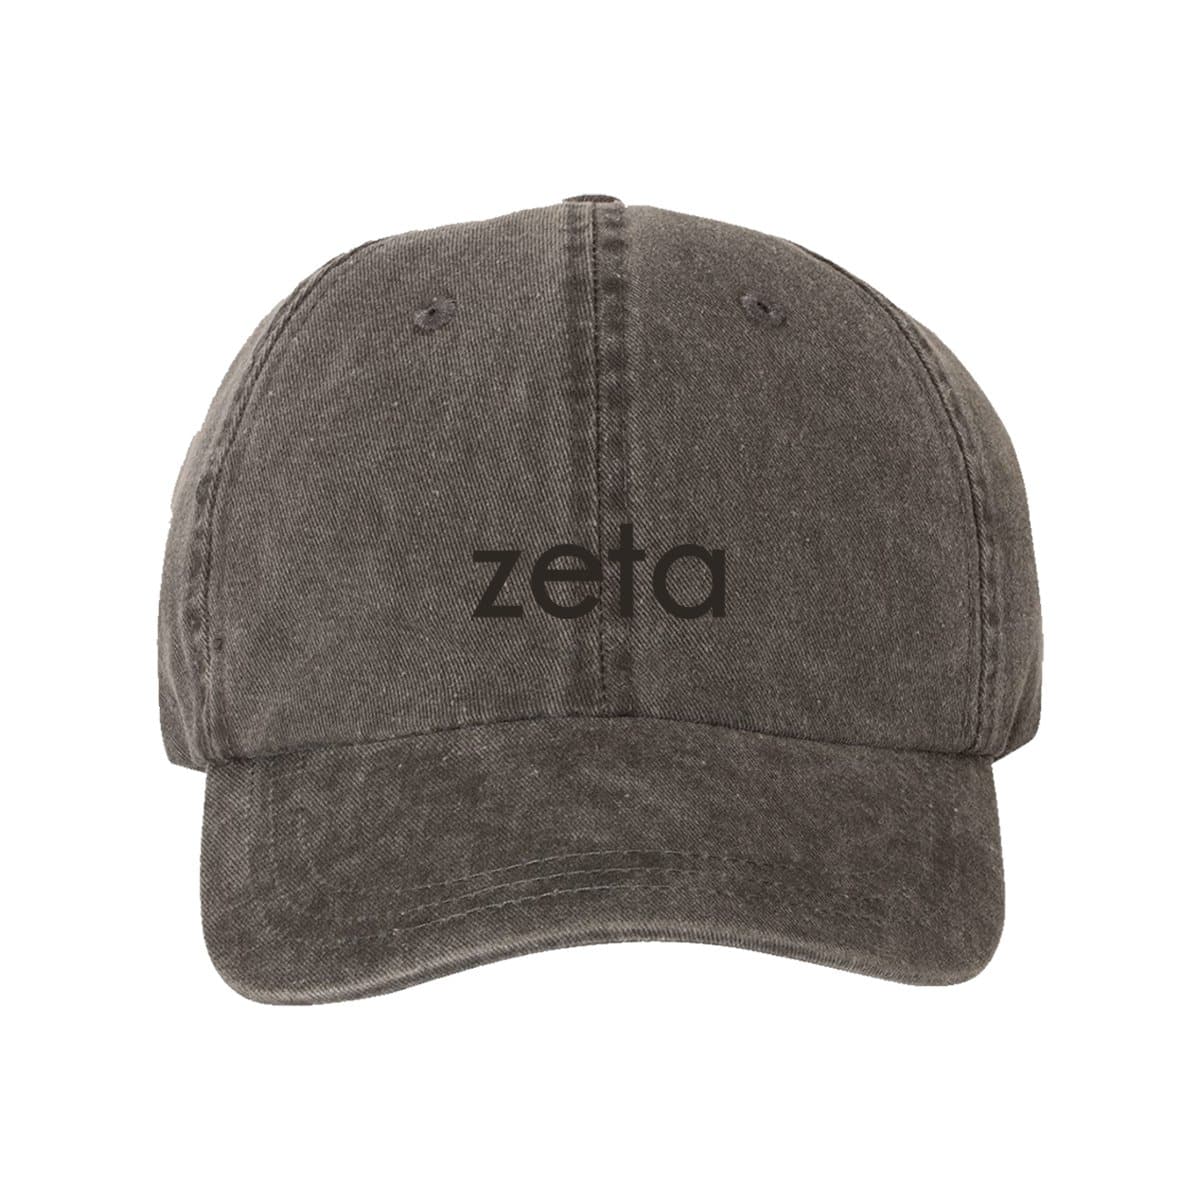 Zeta Tone On Tone Hat | Zeta Tau Alpha | Headwear > Billed hats